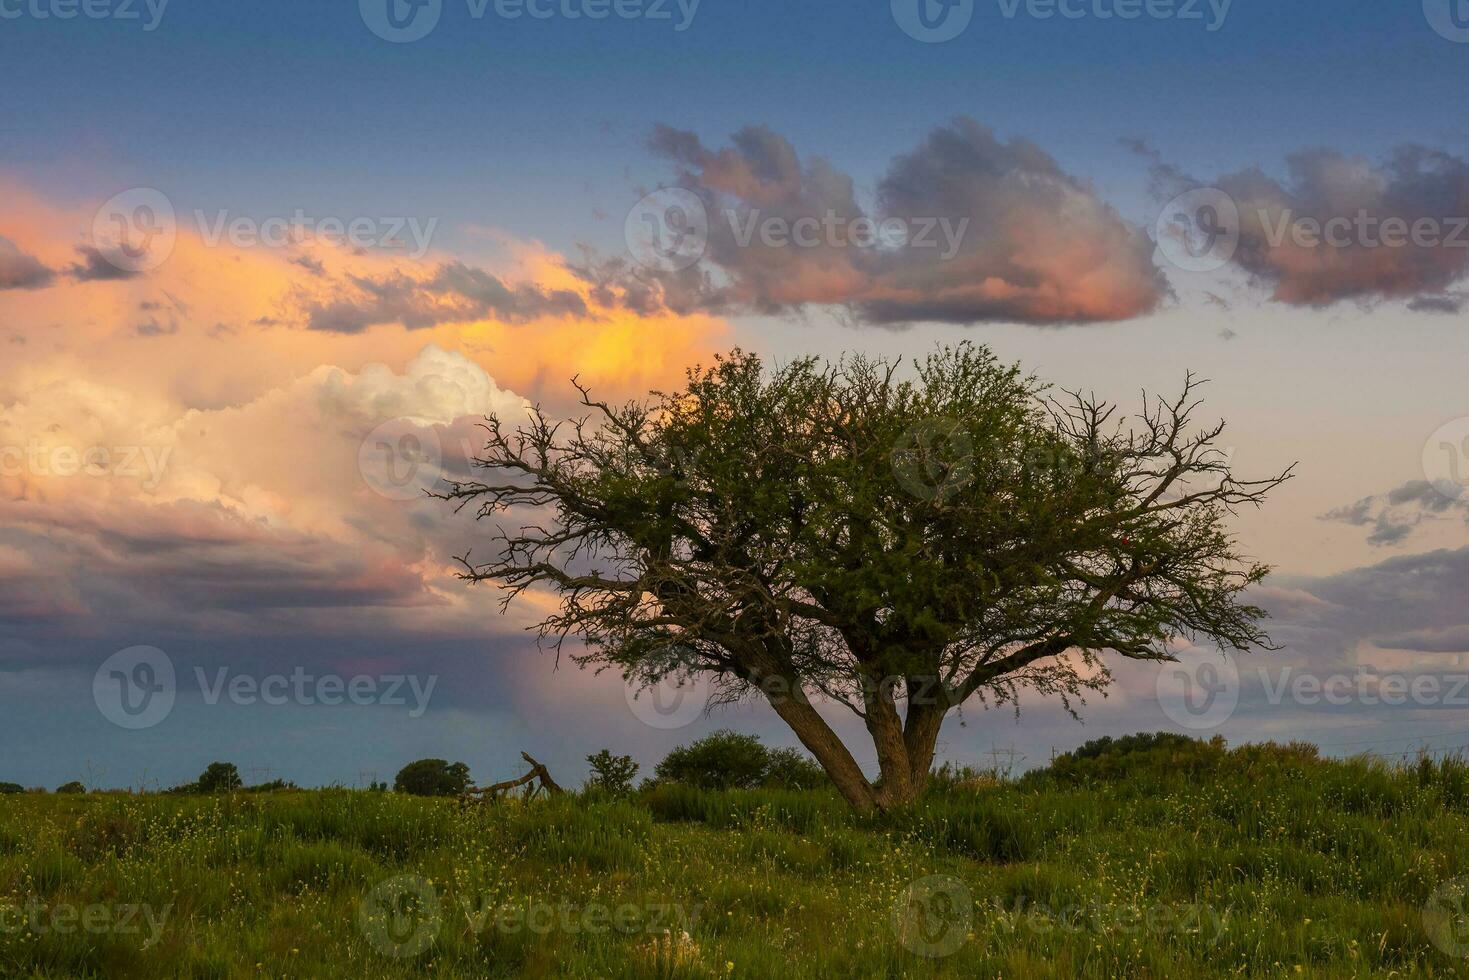 calden albero paesaggio, la pampa Provincia, patagonia, argentina. foto